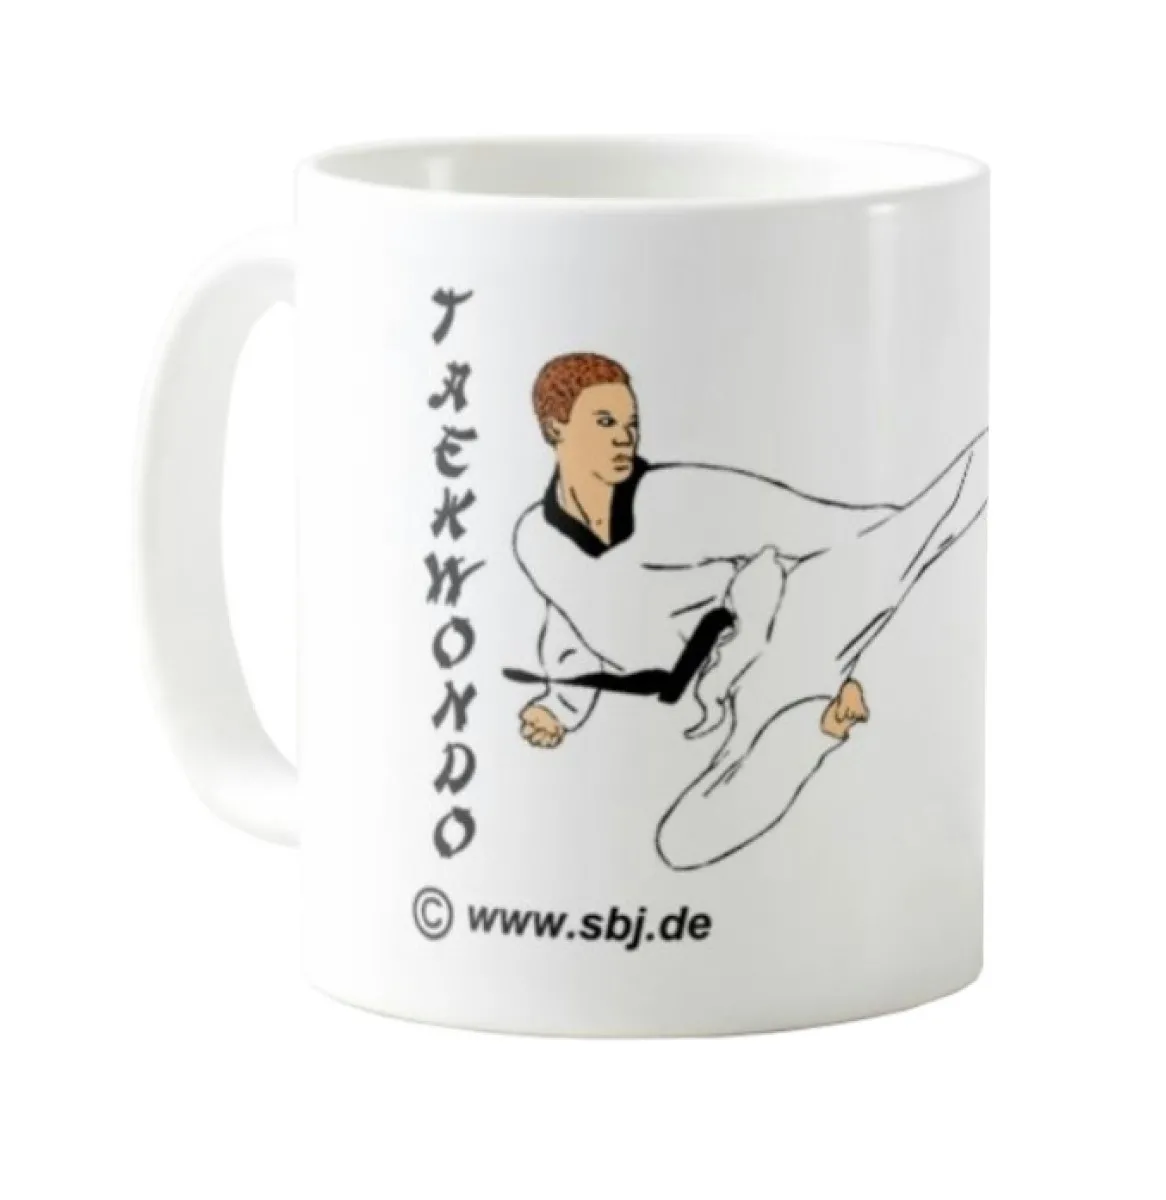 Taekwondo cup